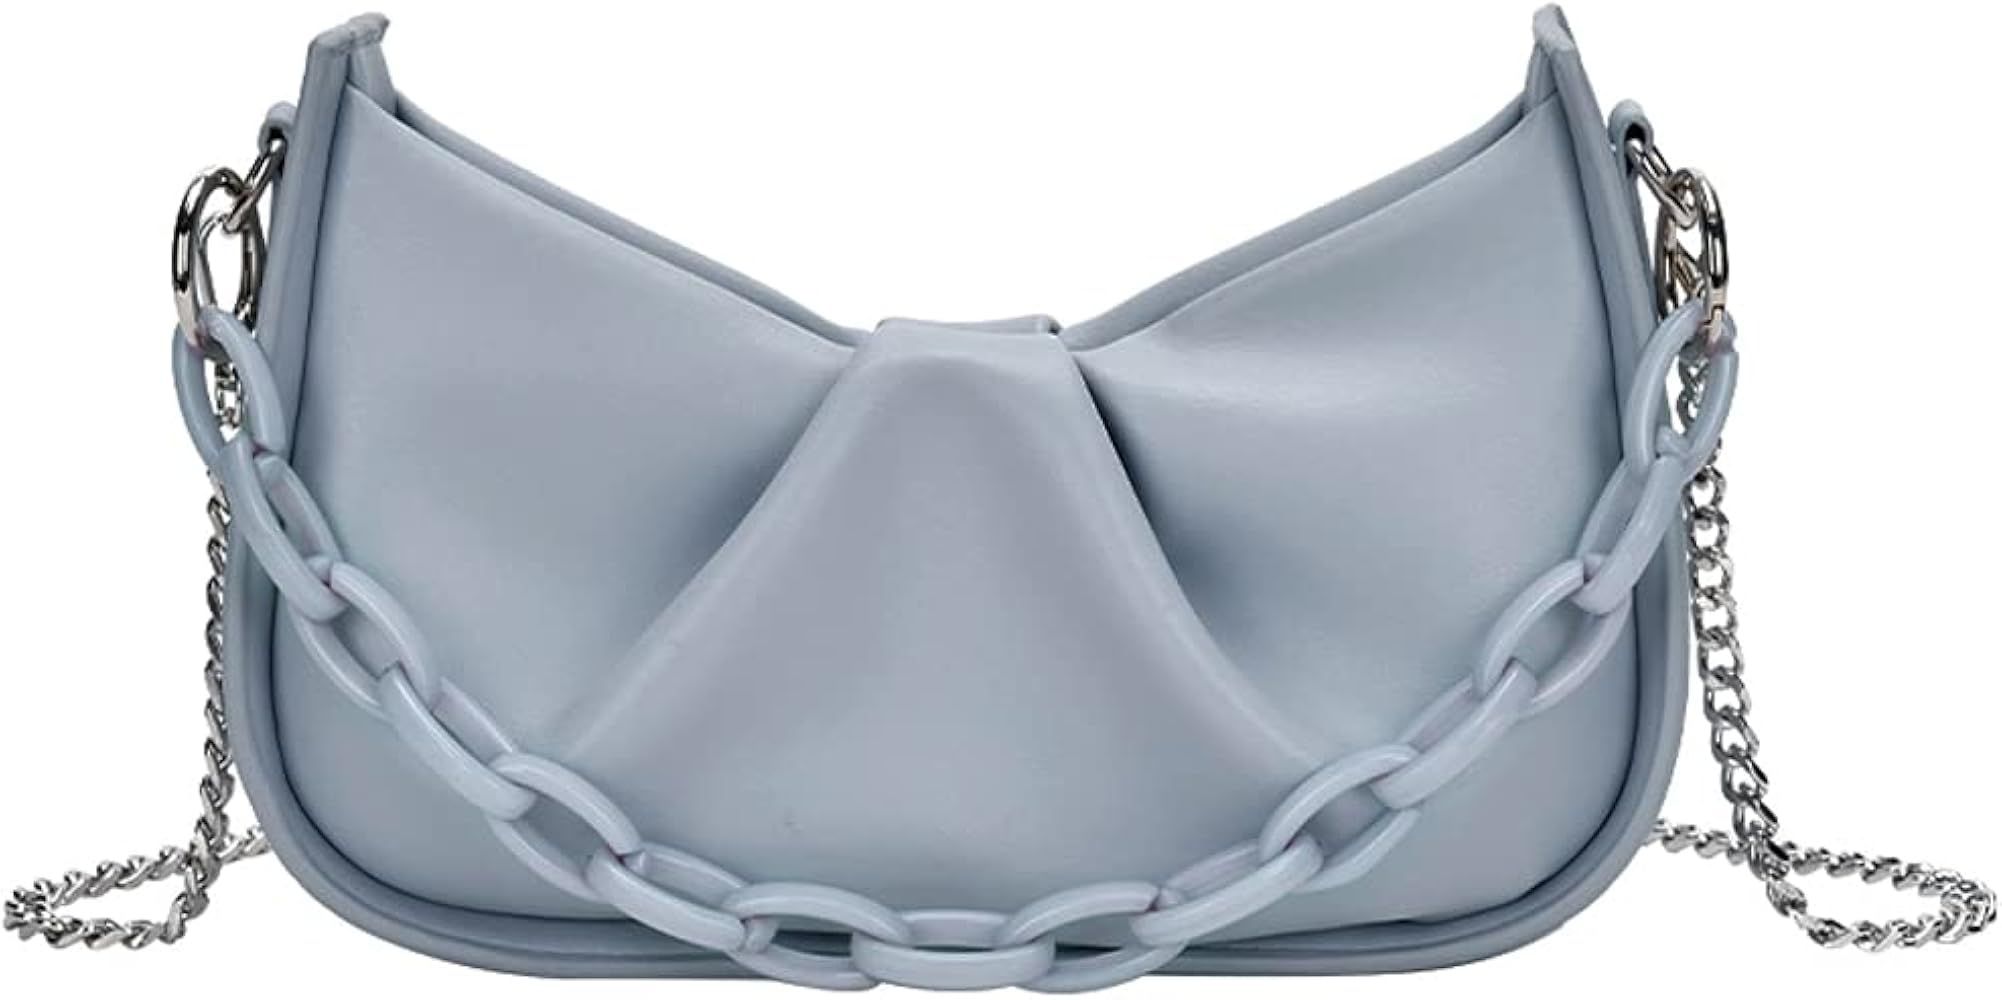 Gxamz Cloud Shoulder Bag with Chain - Dumpling Pouch Clutch Purse Ruched Crossbody Handbag Soft Leat | Amazon (US)